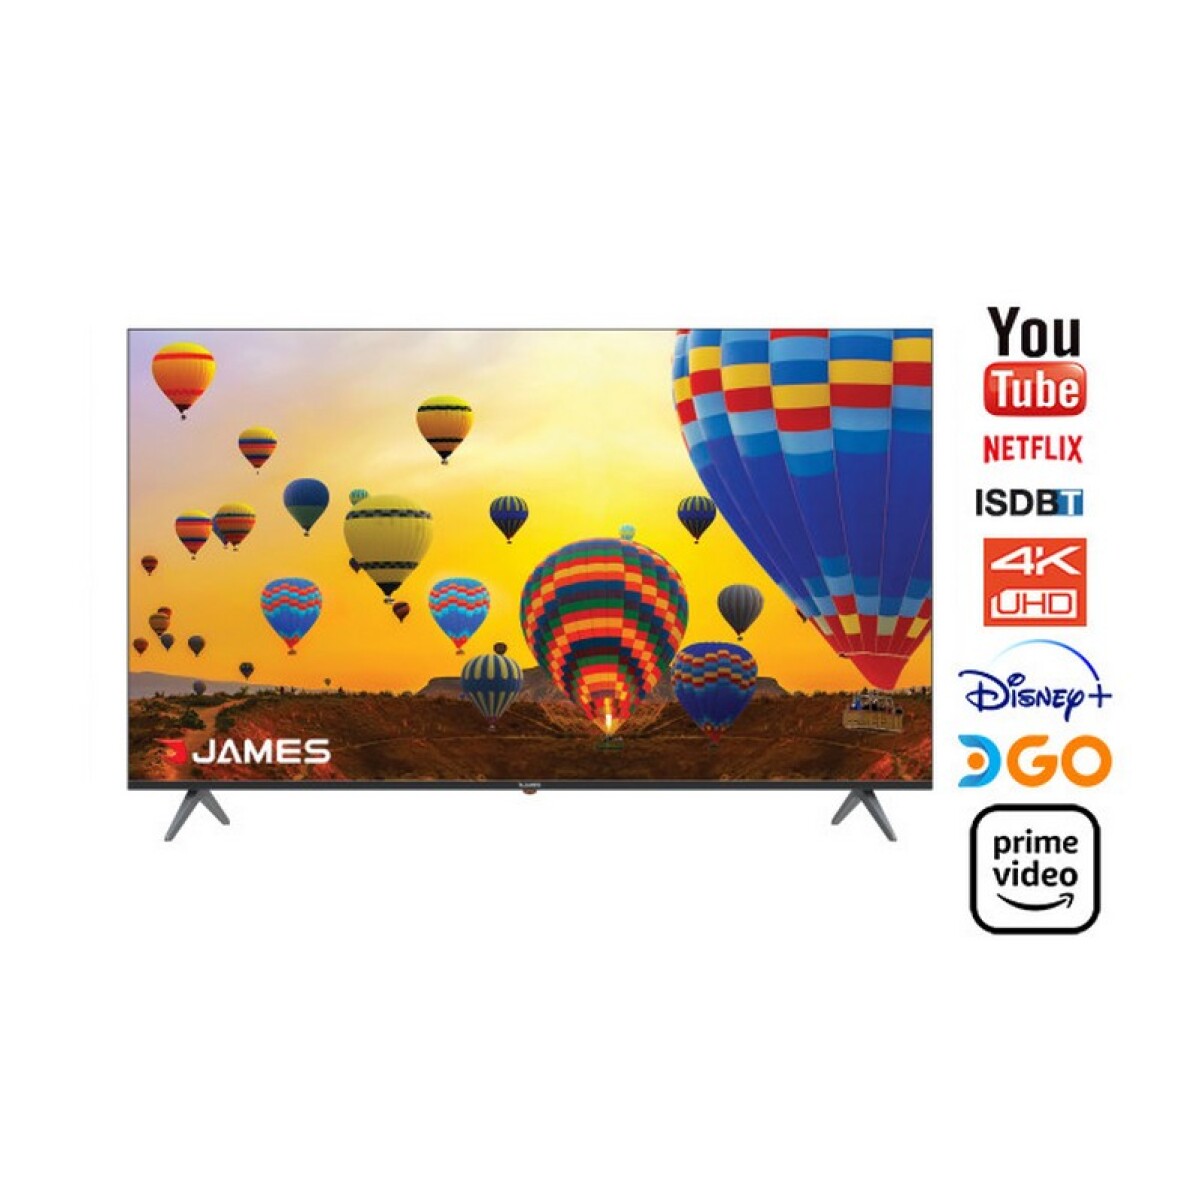 TV JAMES 65" LED SMART TV 4K 